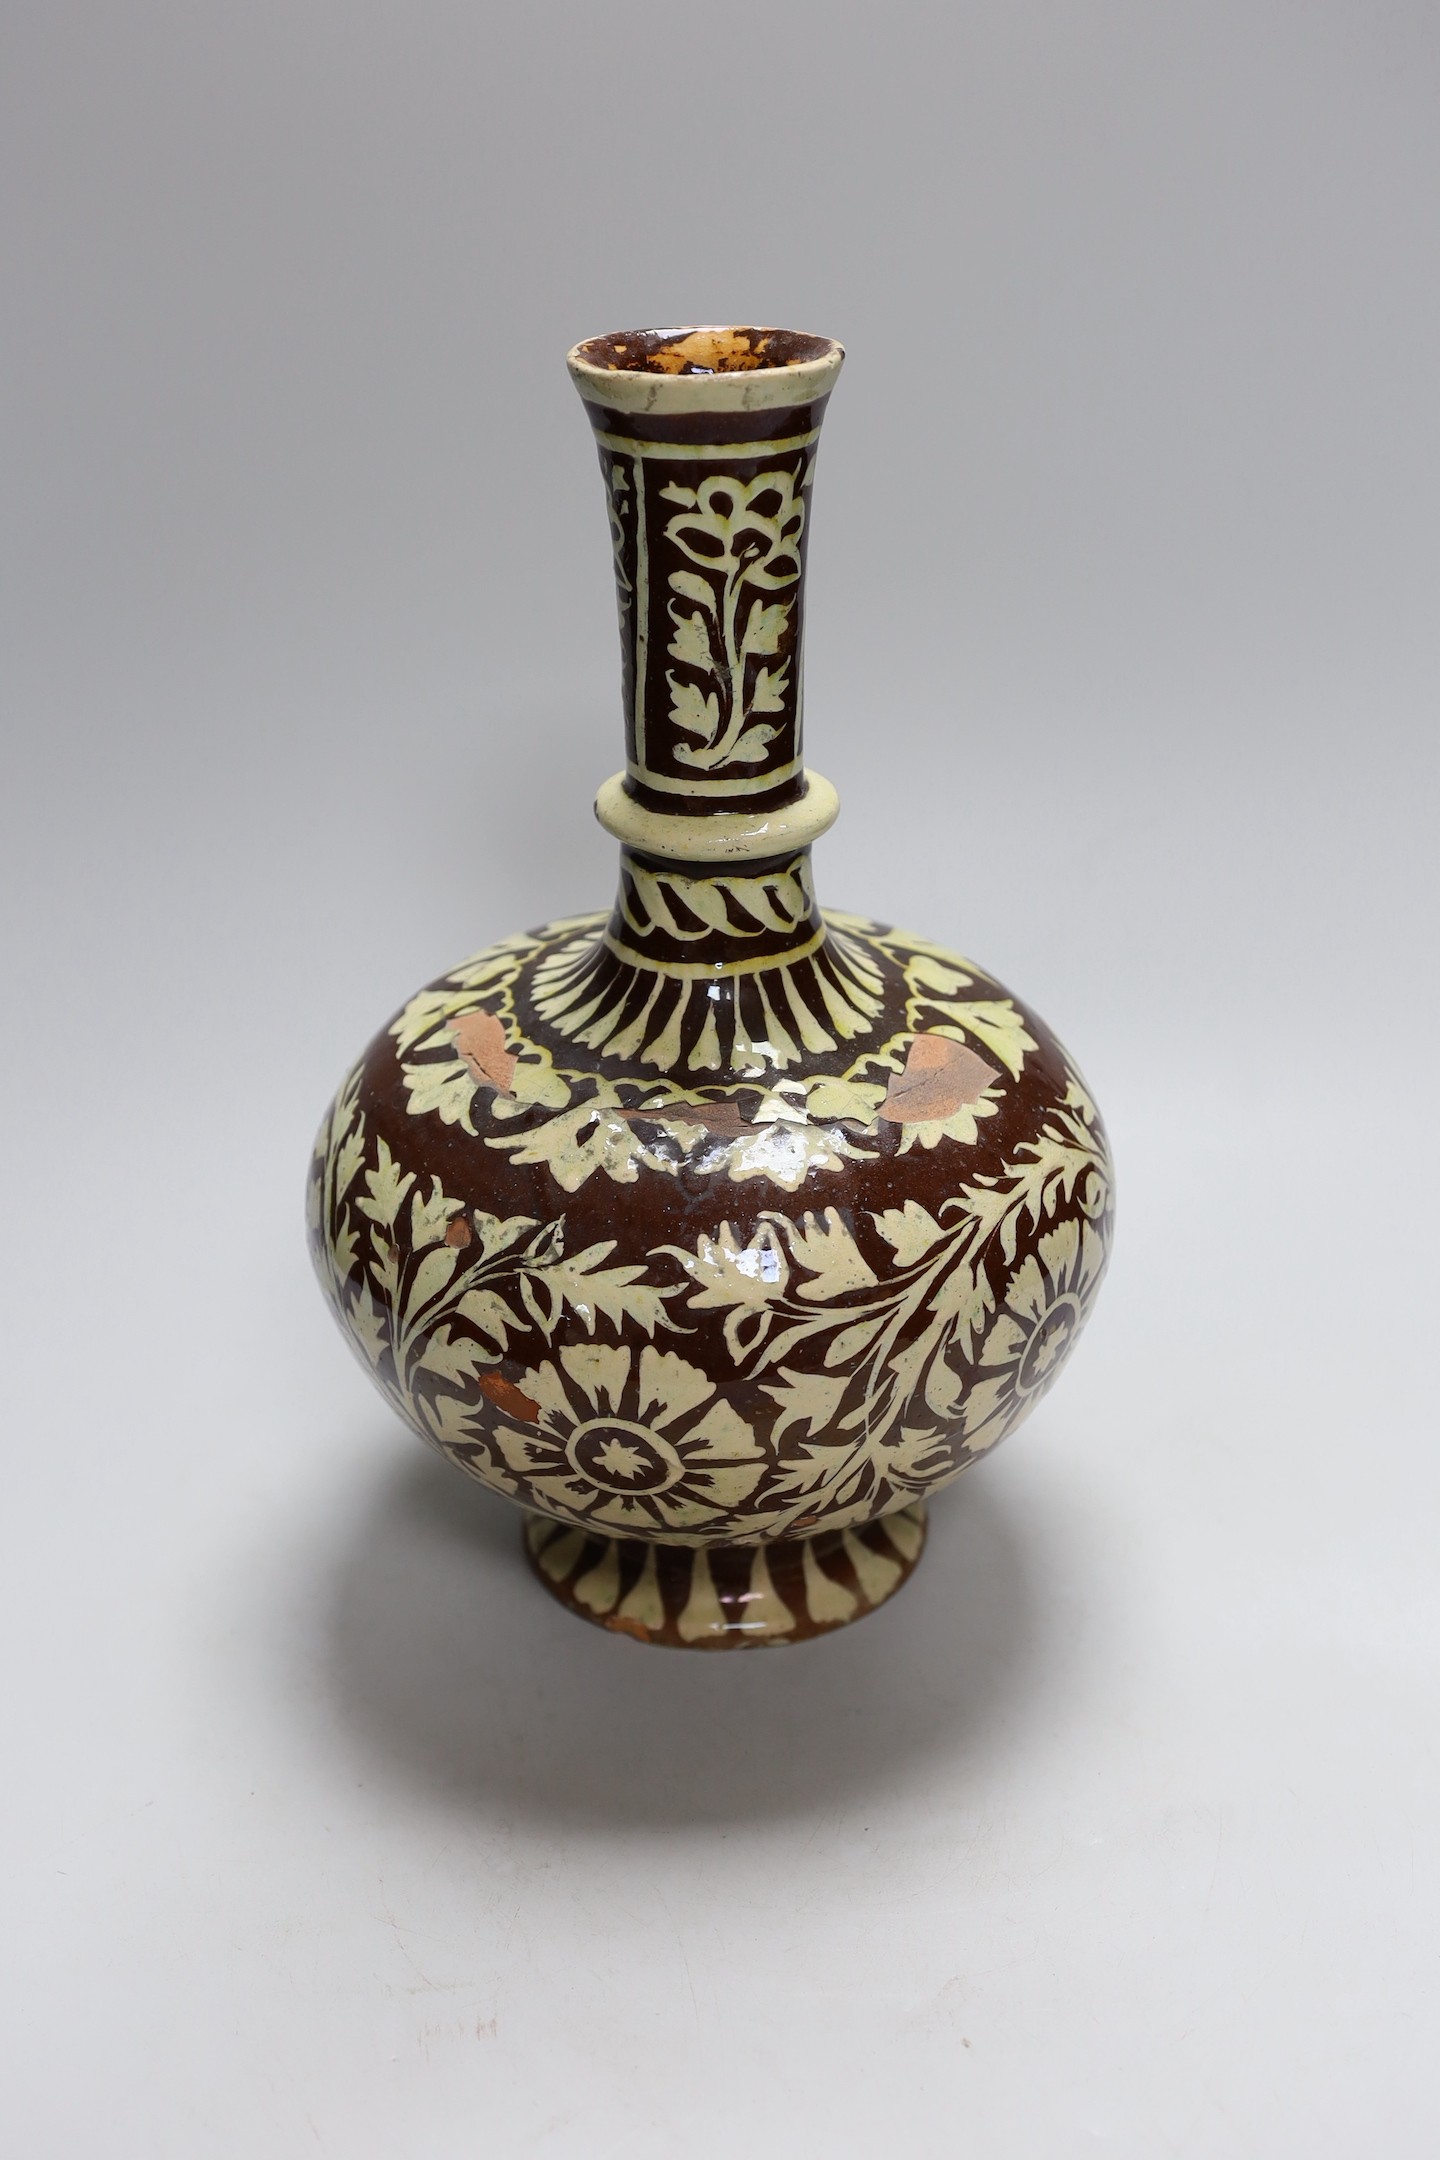 A Swiss/German 19th century glazed terracotta vase. 30.5cm tall